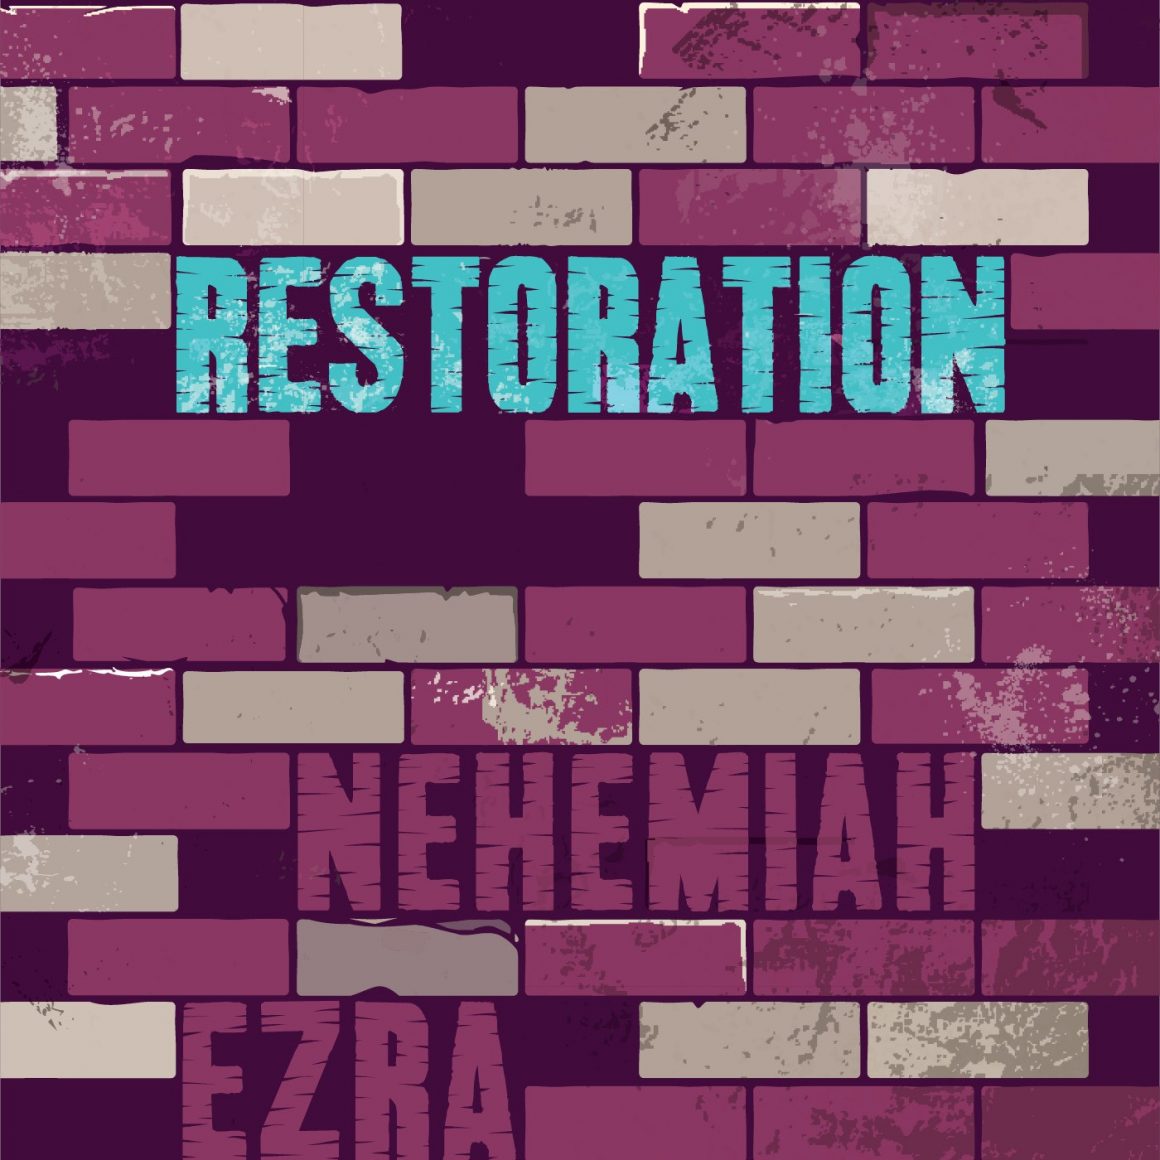 Restoration: Persevering in Trials